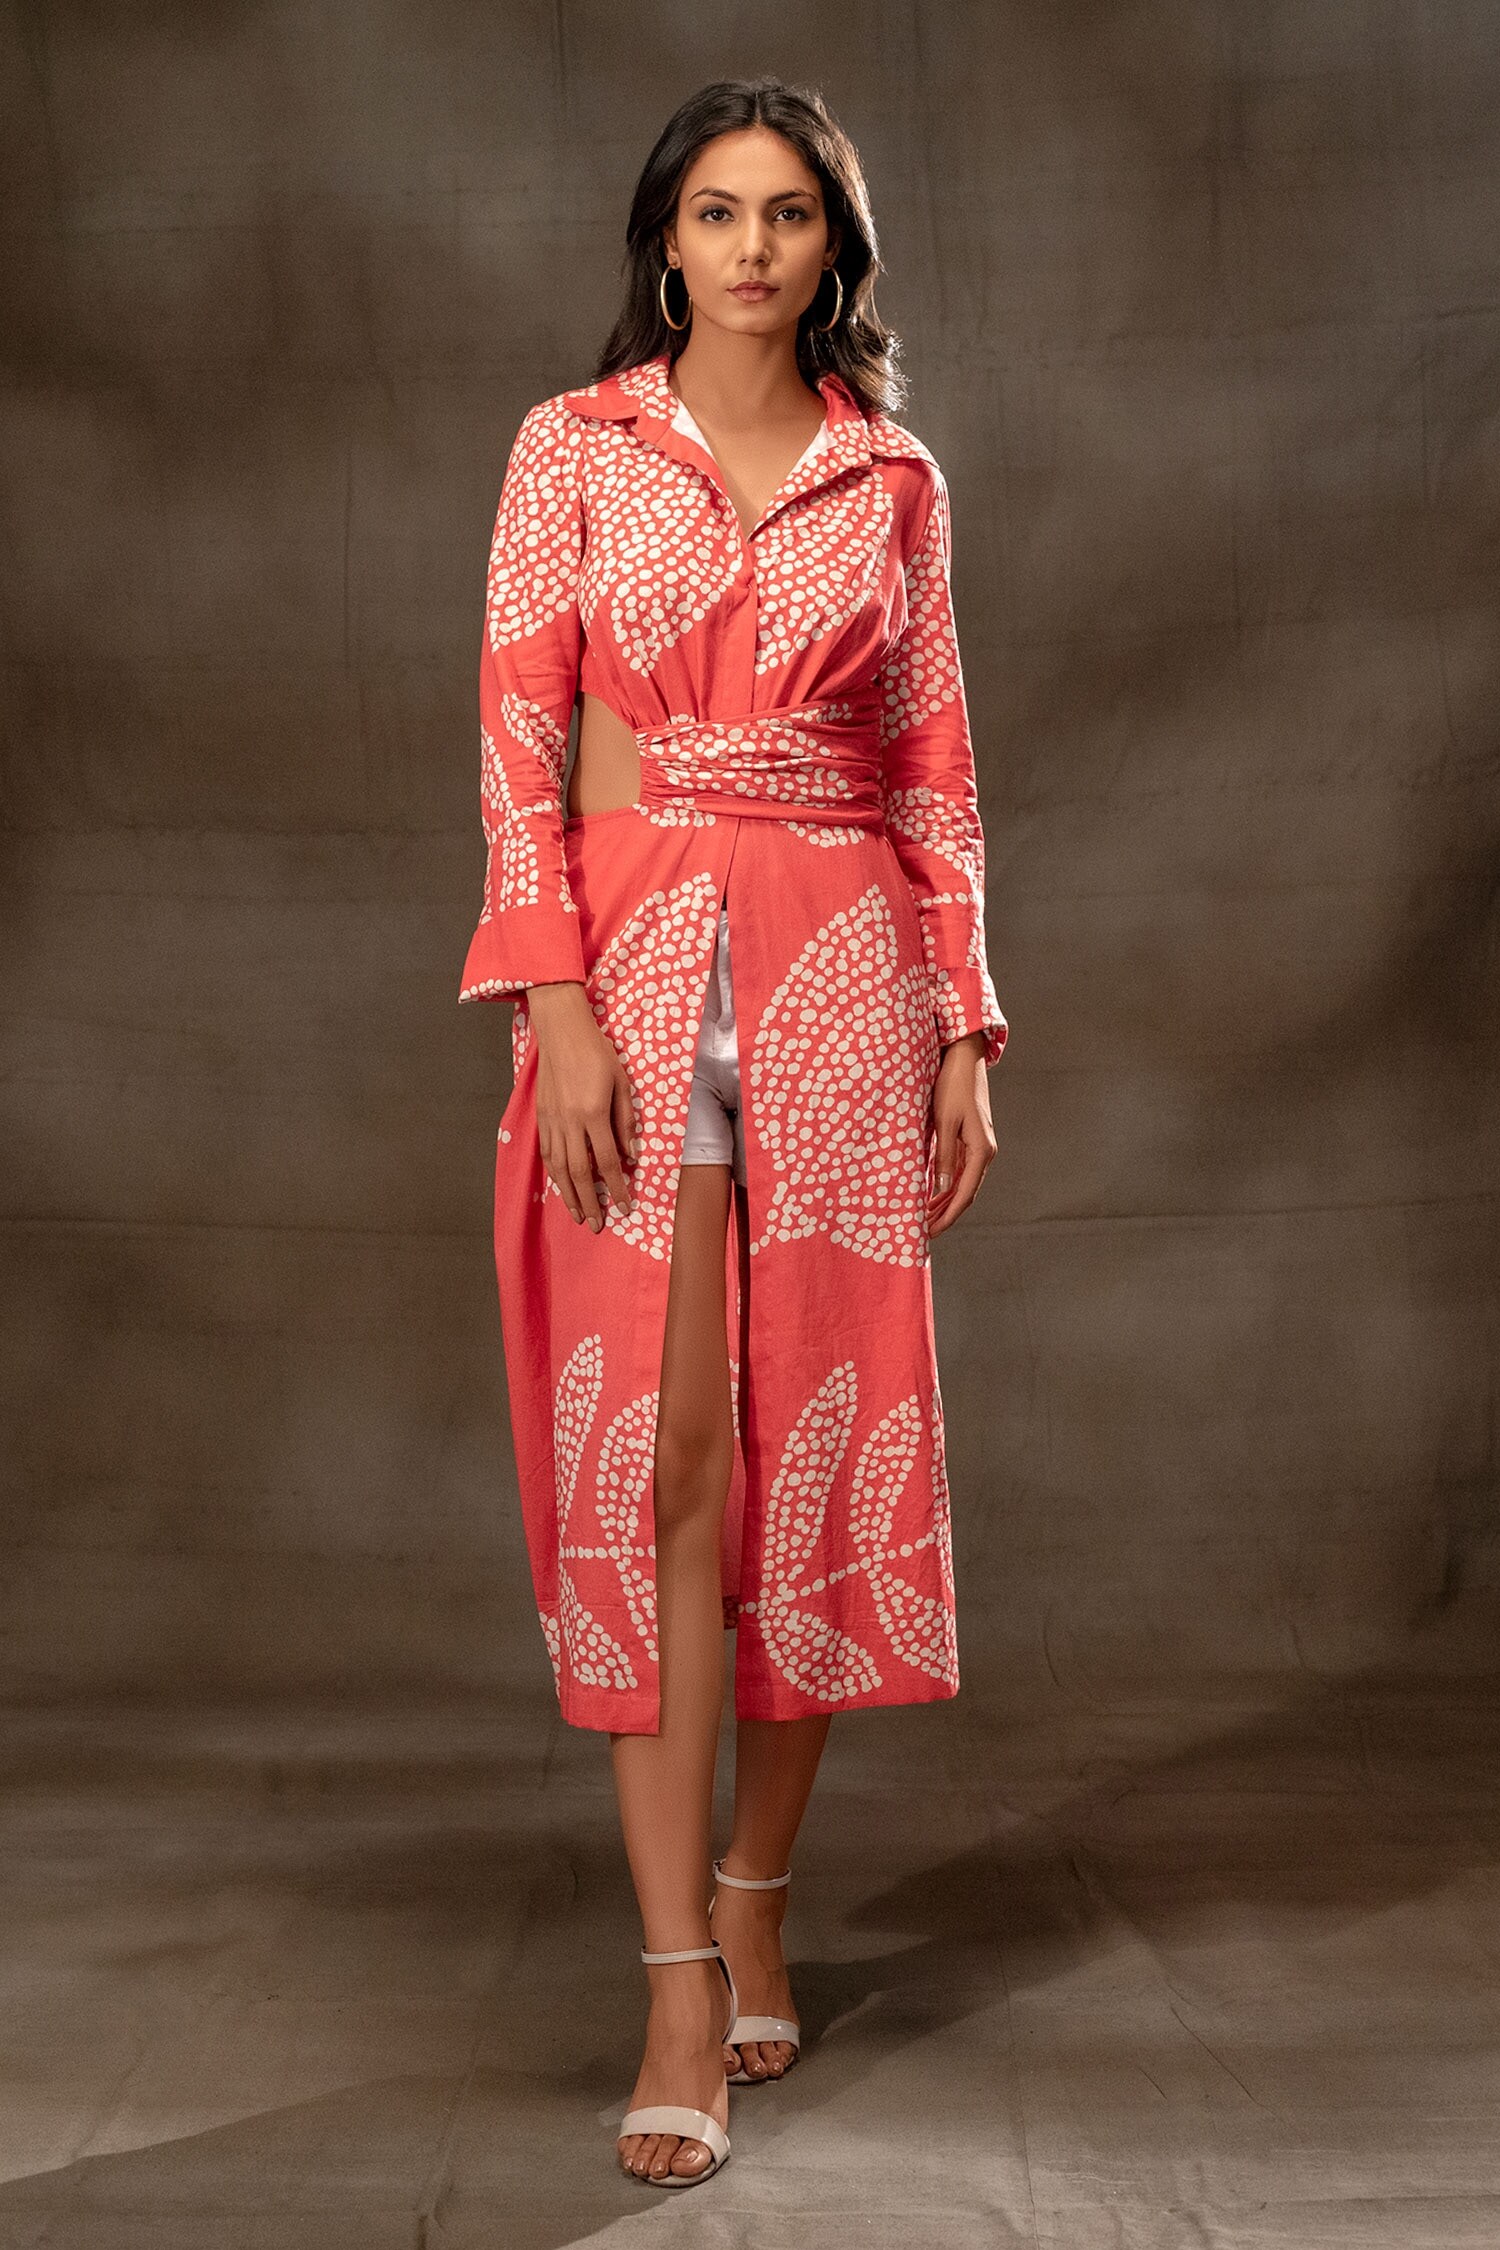 Verb by Pallavi Singhee Pink Cotton Poplin Side Cutout Dress